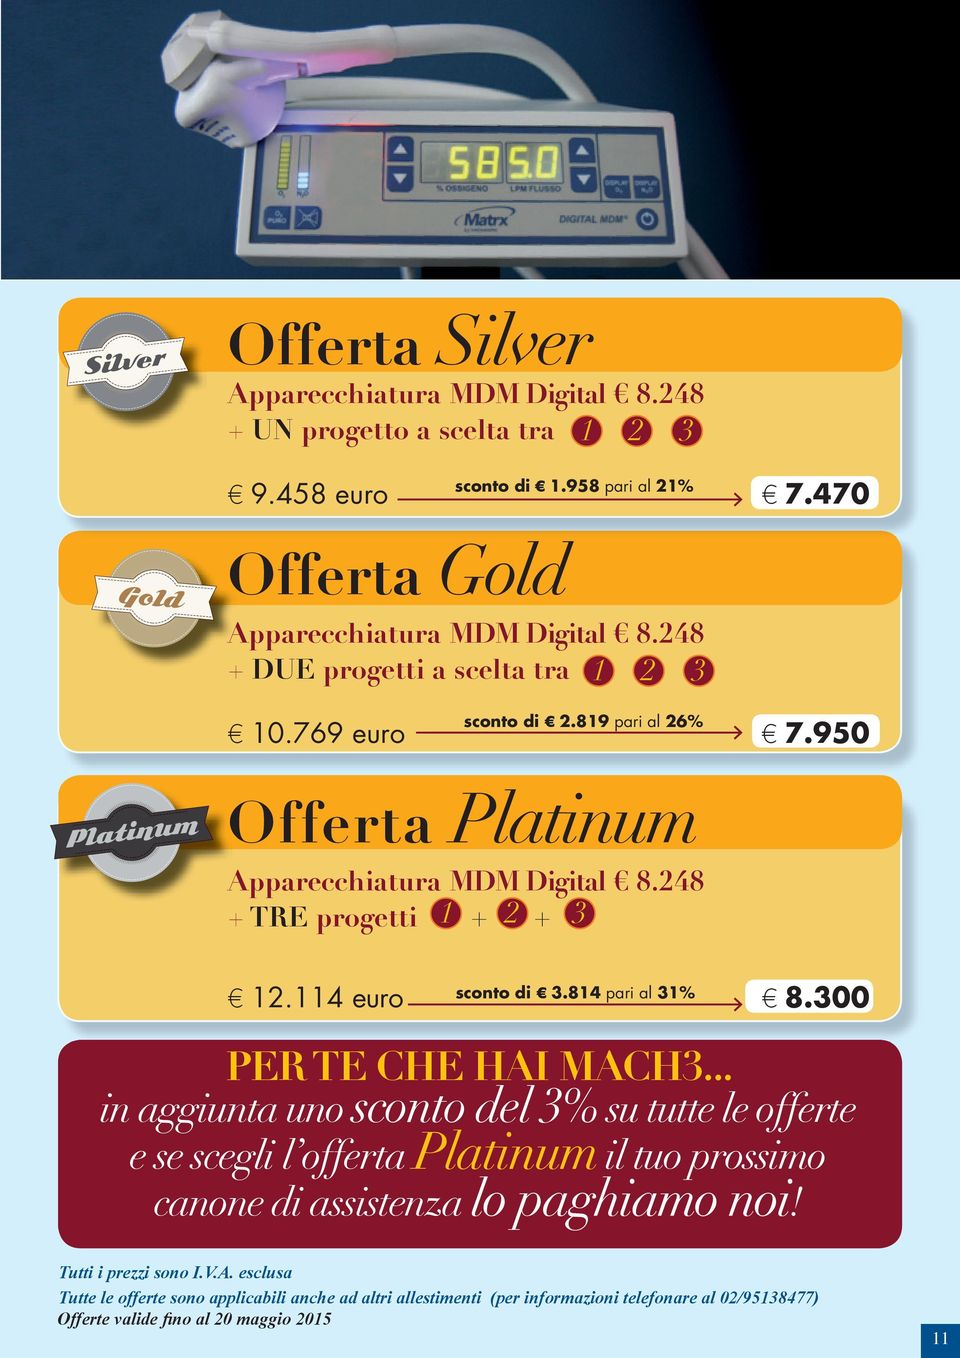 950 Platinum Offerta Platinum Apparecchiatura MDM Digital 8.248 + TRE progetti 1 + 2 + 3 sconto di 3.814 pari al 31% 12.114 euro 8.300 PER TE CHE HAI MACH3.